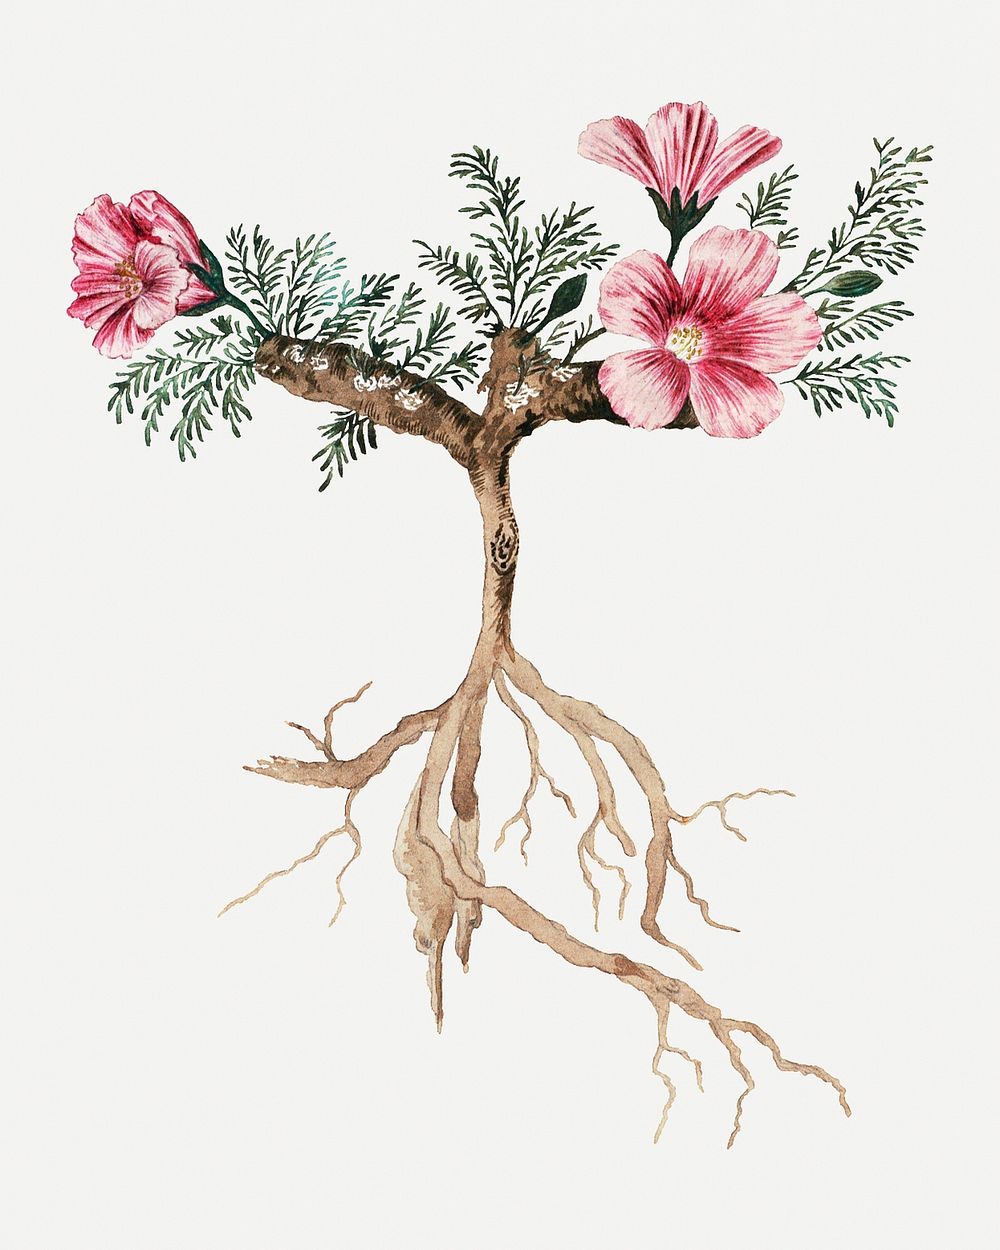 Monsonia multifidum psd vintage flower illustration set, remixed from the artworks by Robert Jacob Gordon